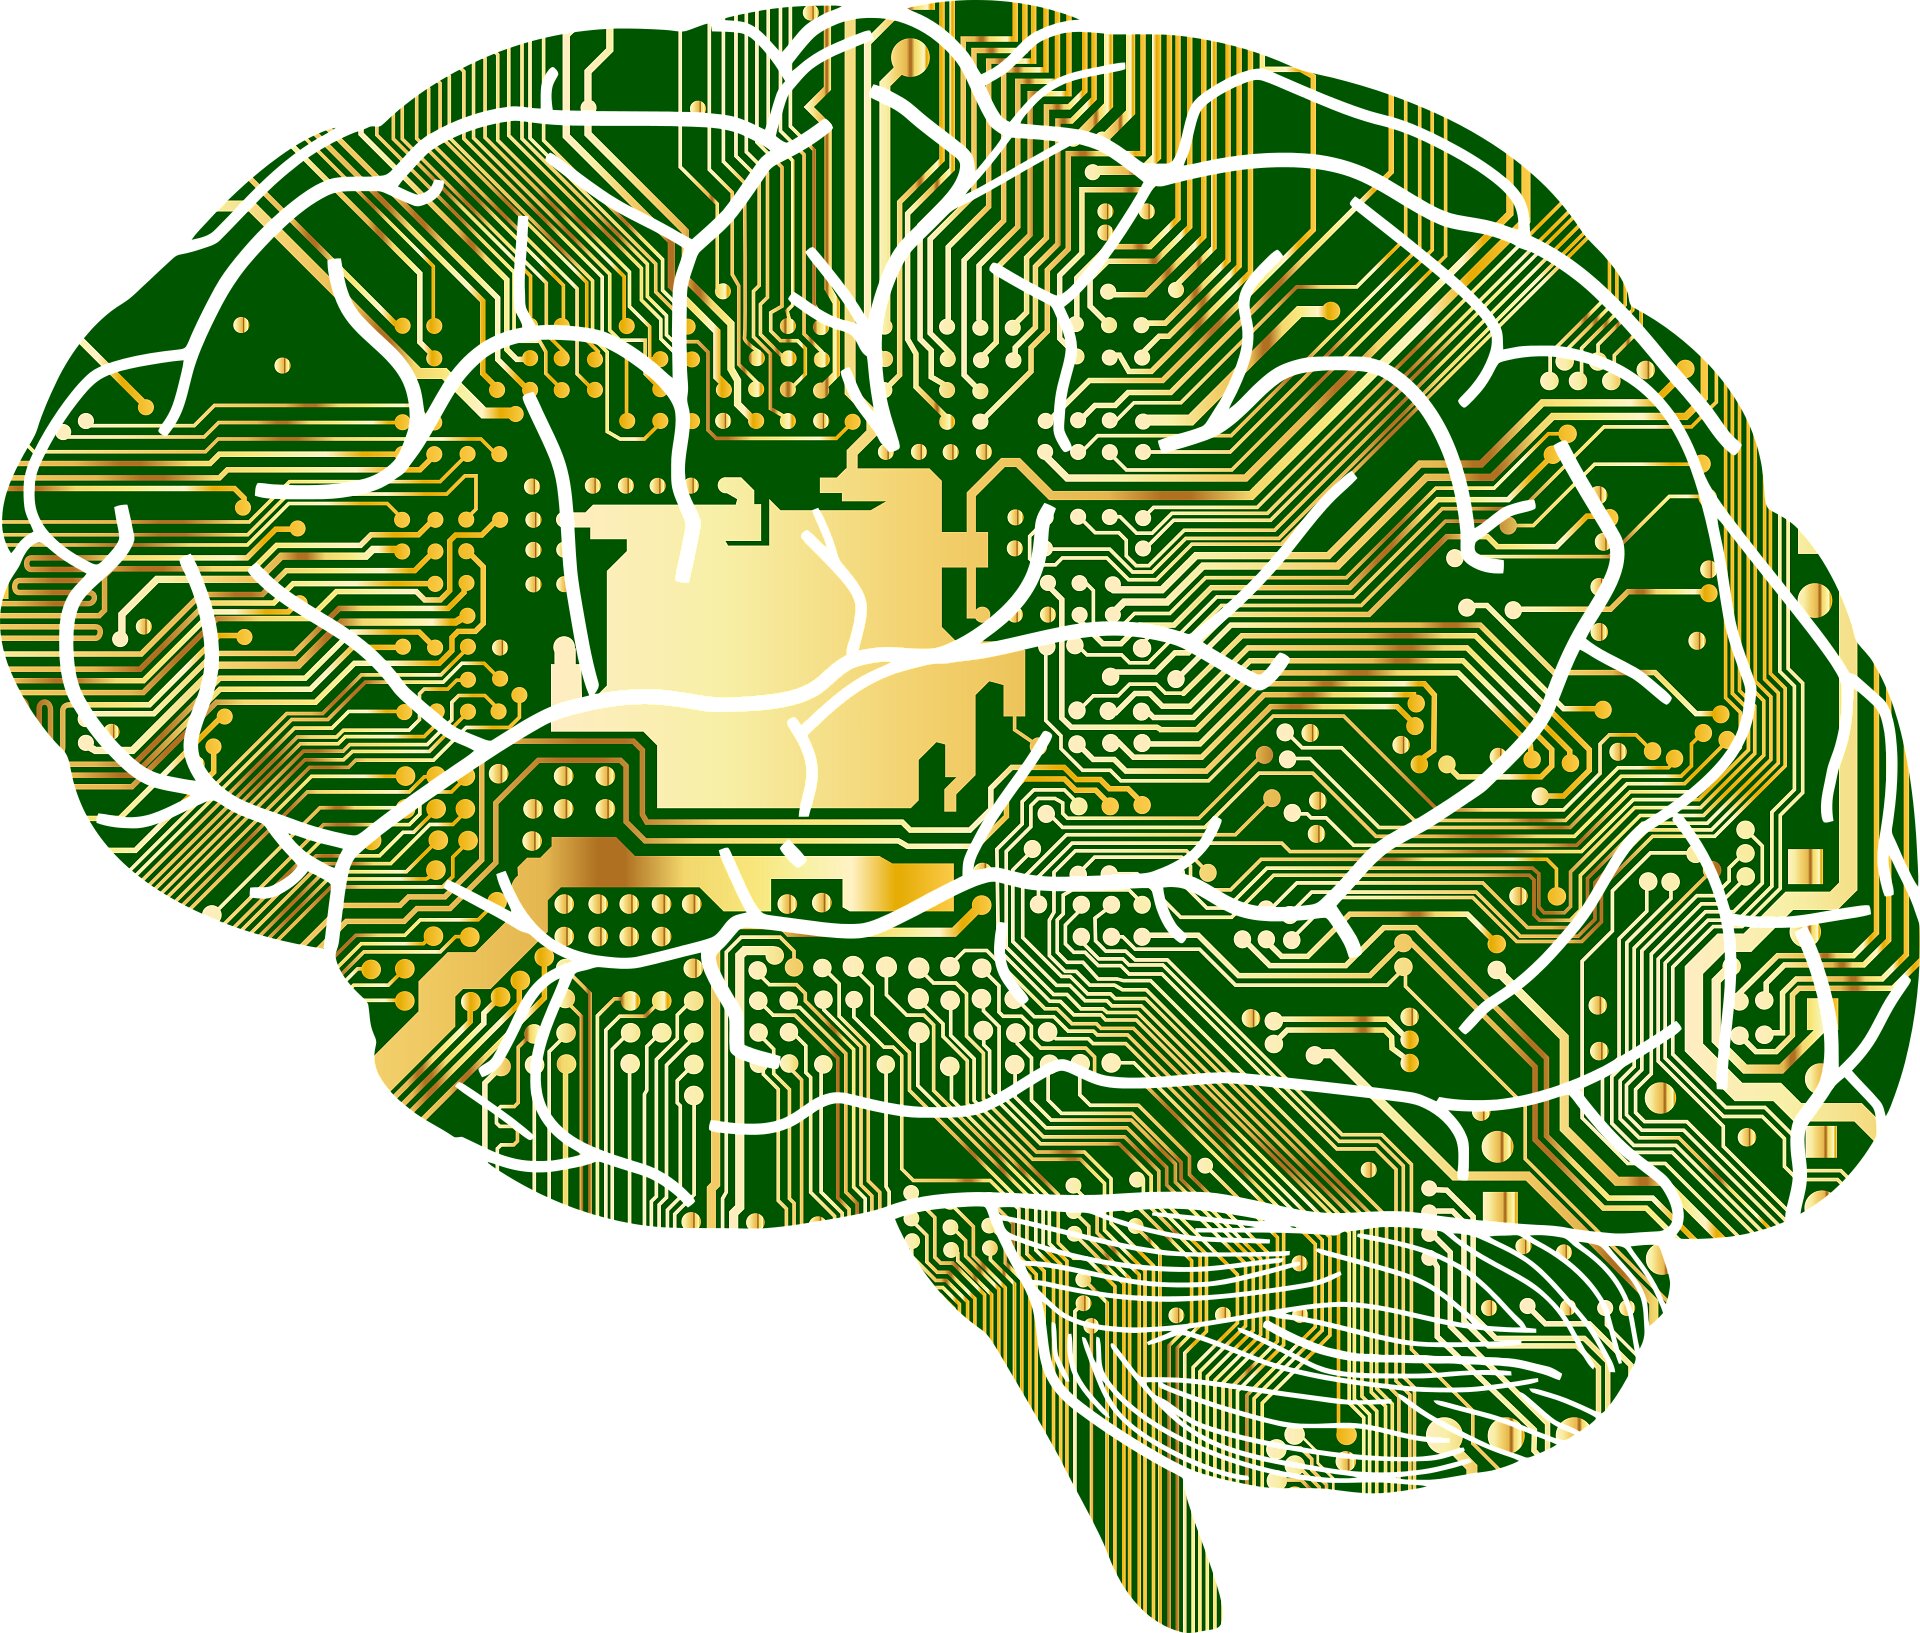 #Researchers develop hybrid human-machine framework for building smarter AI